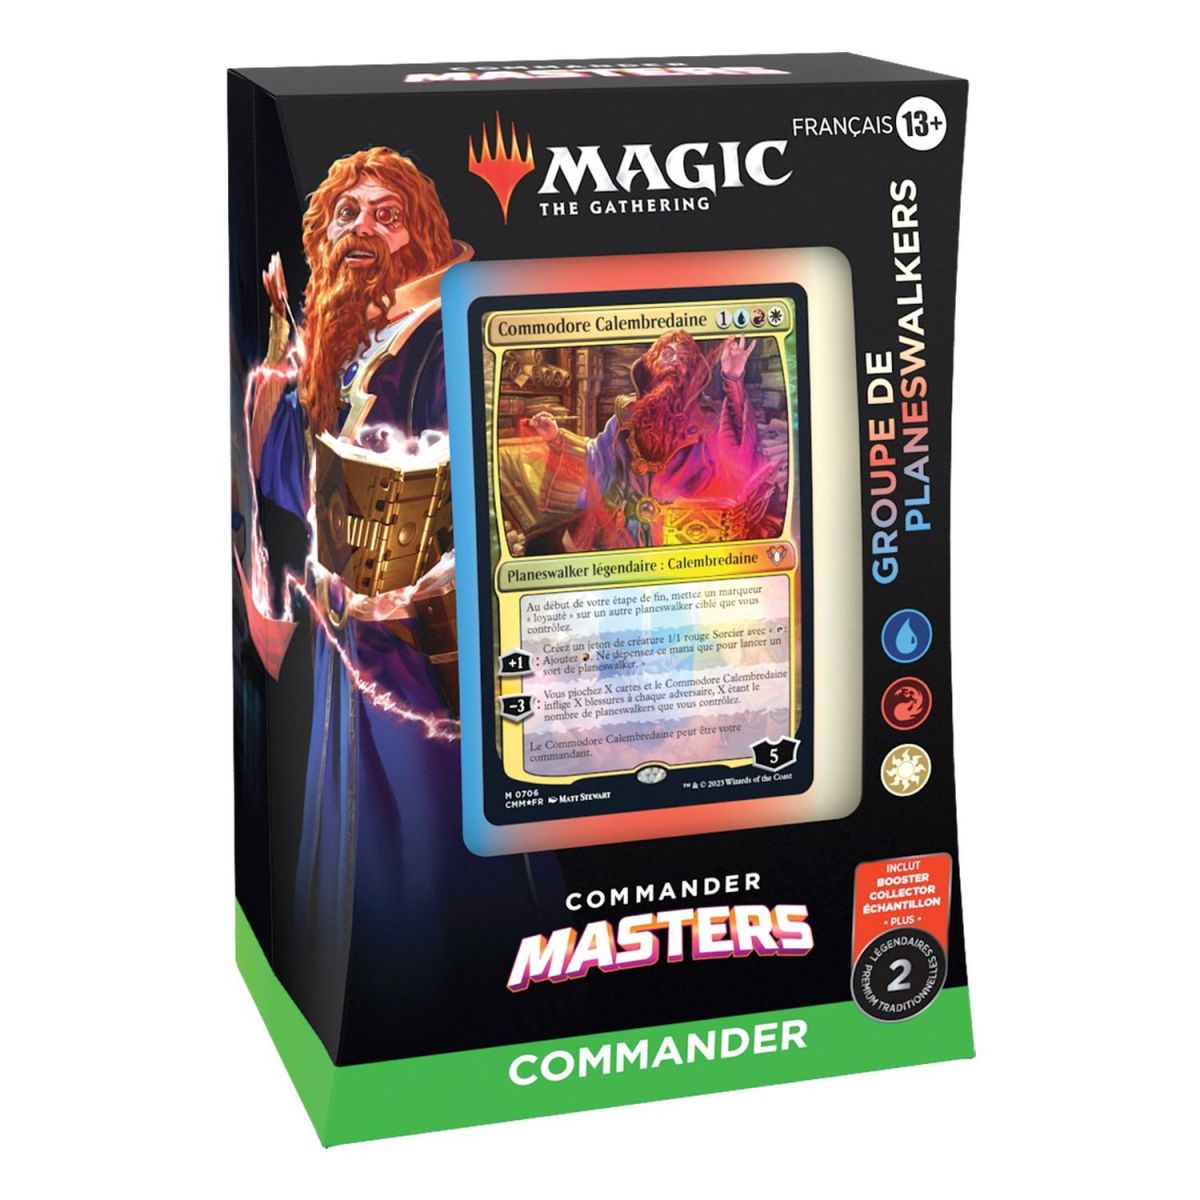 Item MTG - Deck Commander - Commander Masters - Groupe de Planeswalkers - FR